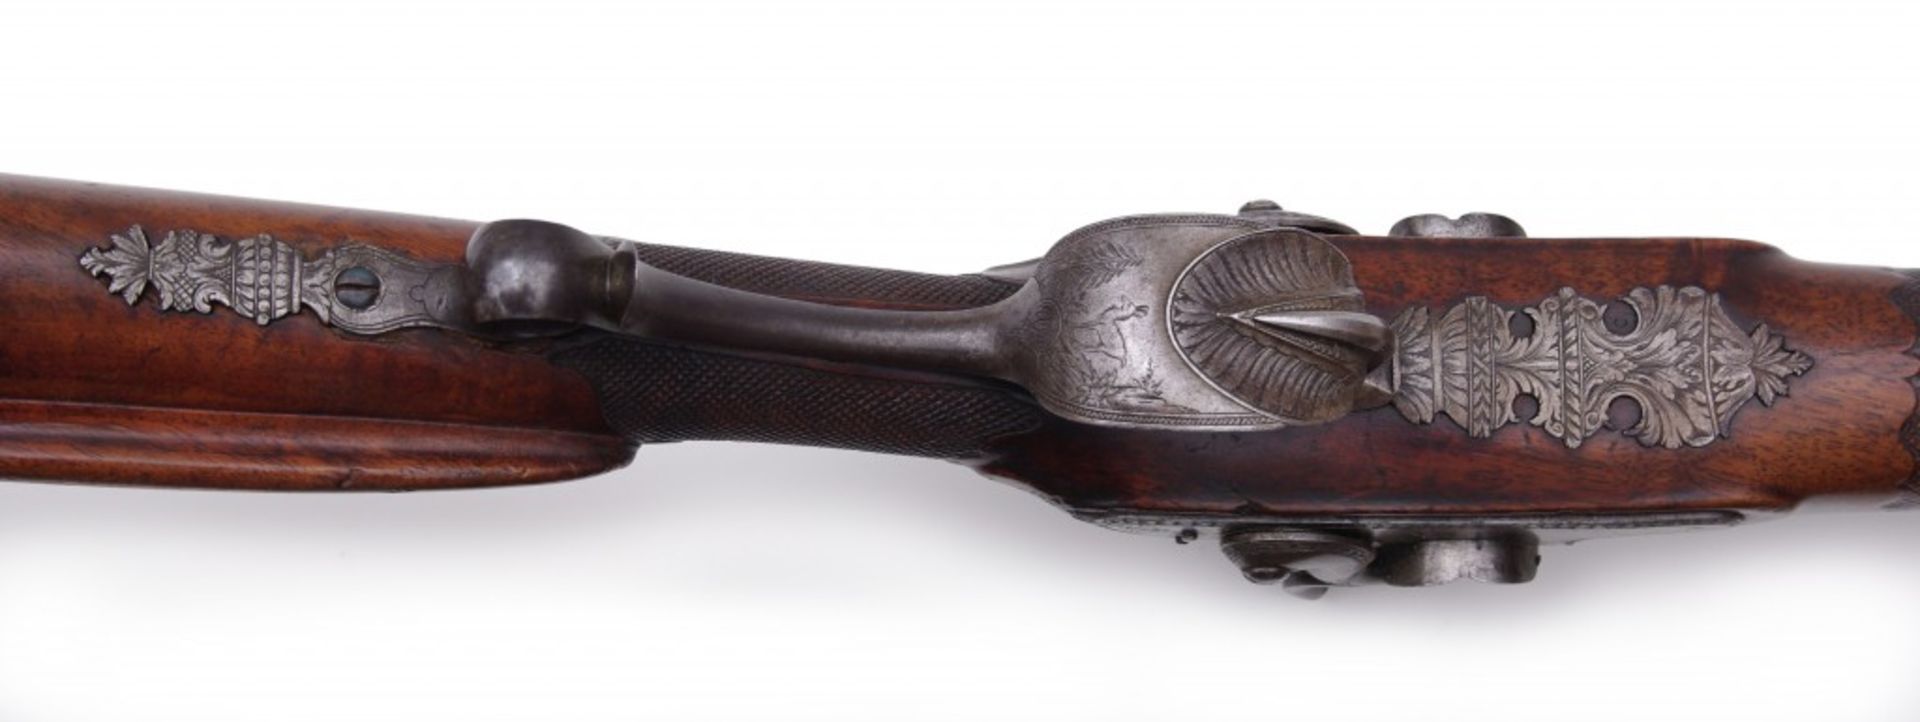 A Double-Barrelled Percussion Shotgun by Heinrich Daniel Anschütz< - Bild 4 aus 12